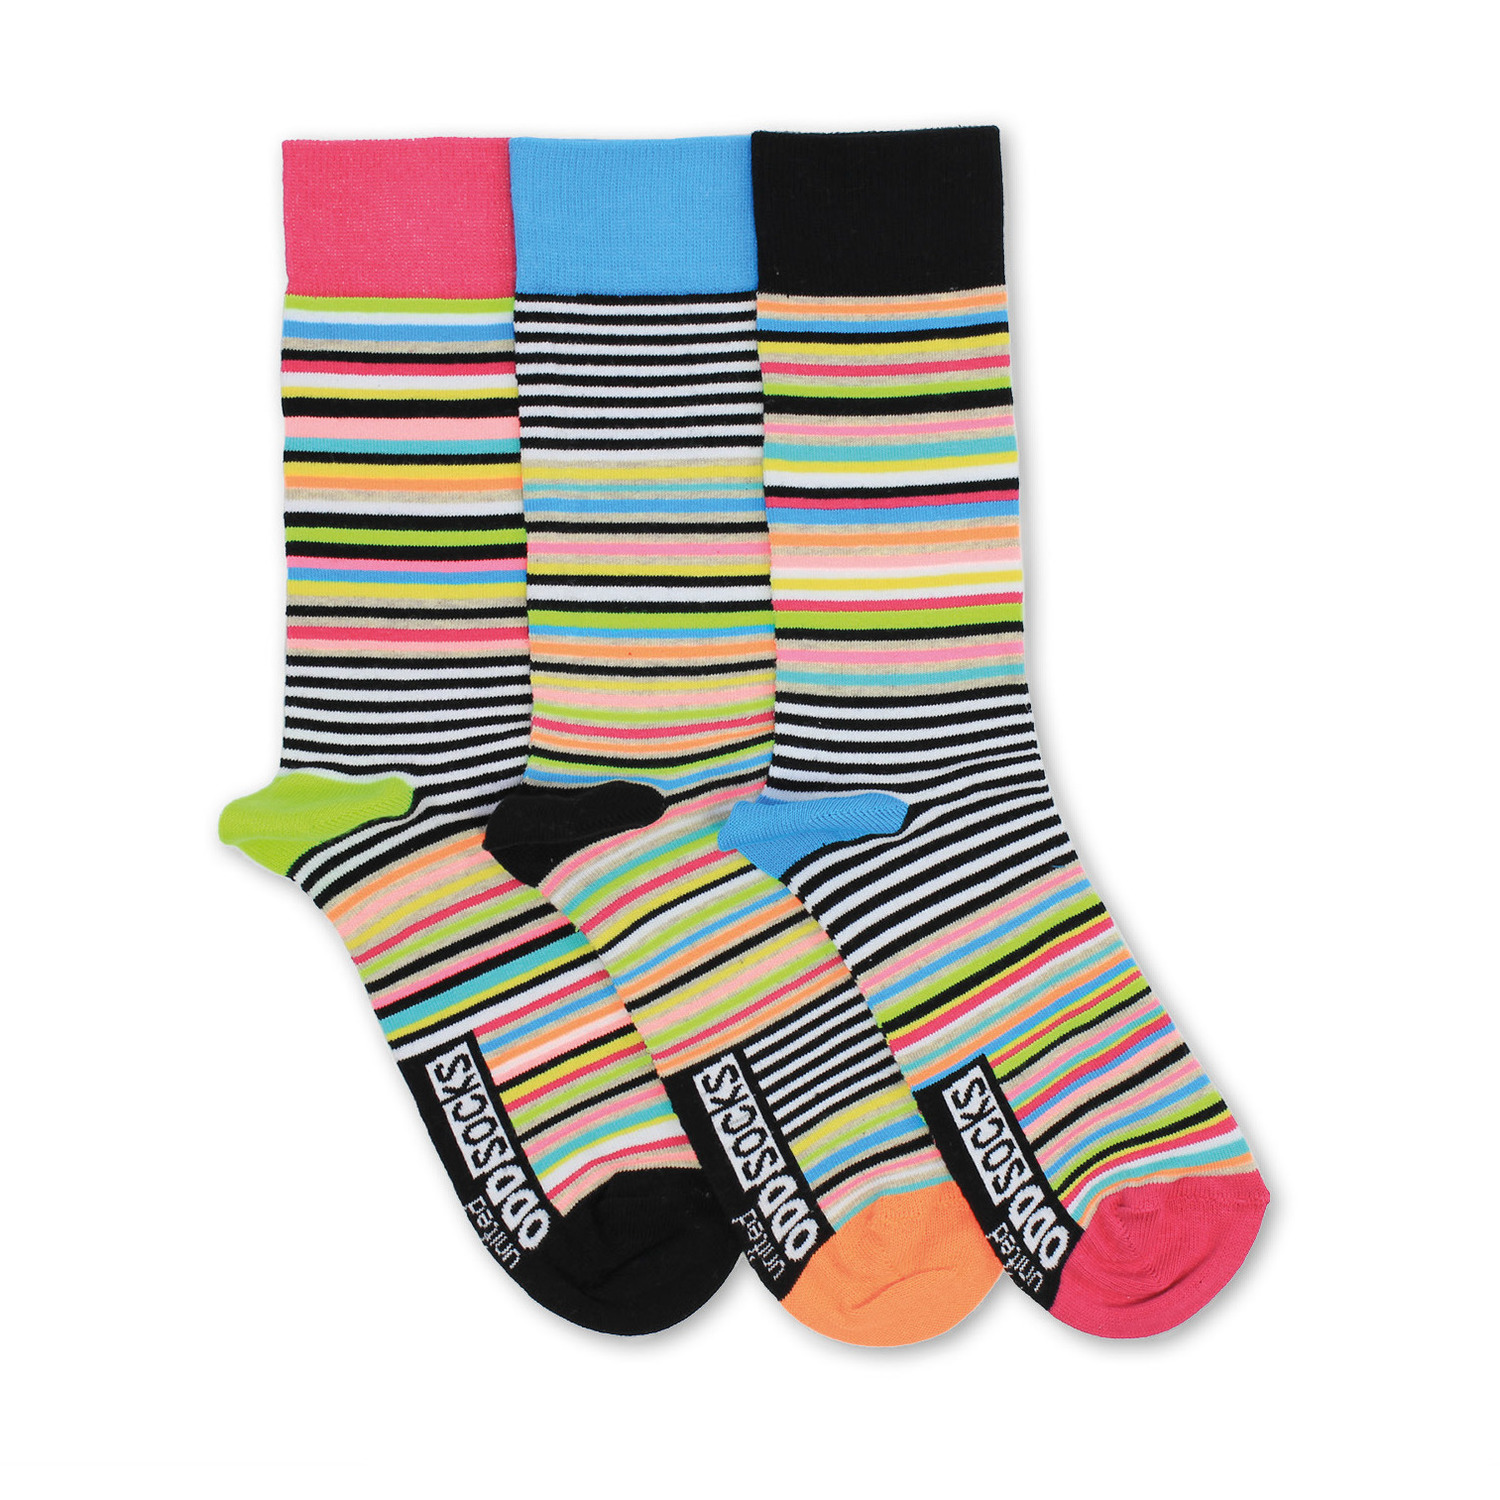 Socken Neon-Streifen Füßlinge Oddsocks in 39-46 Strümpfe bunt im 3er Set 